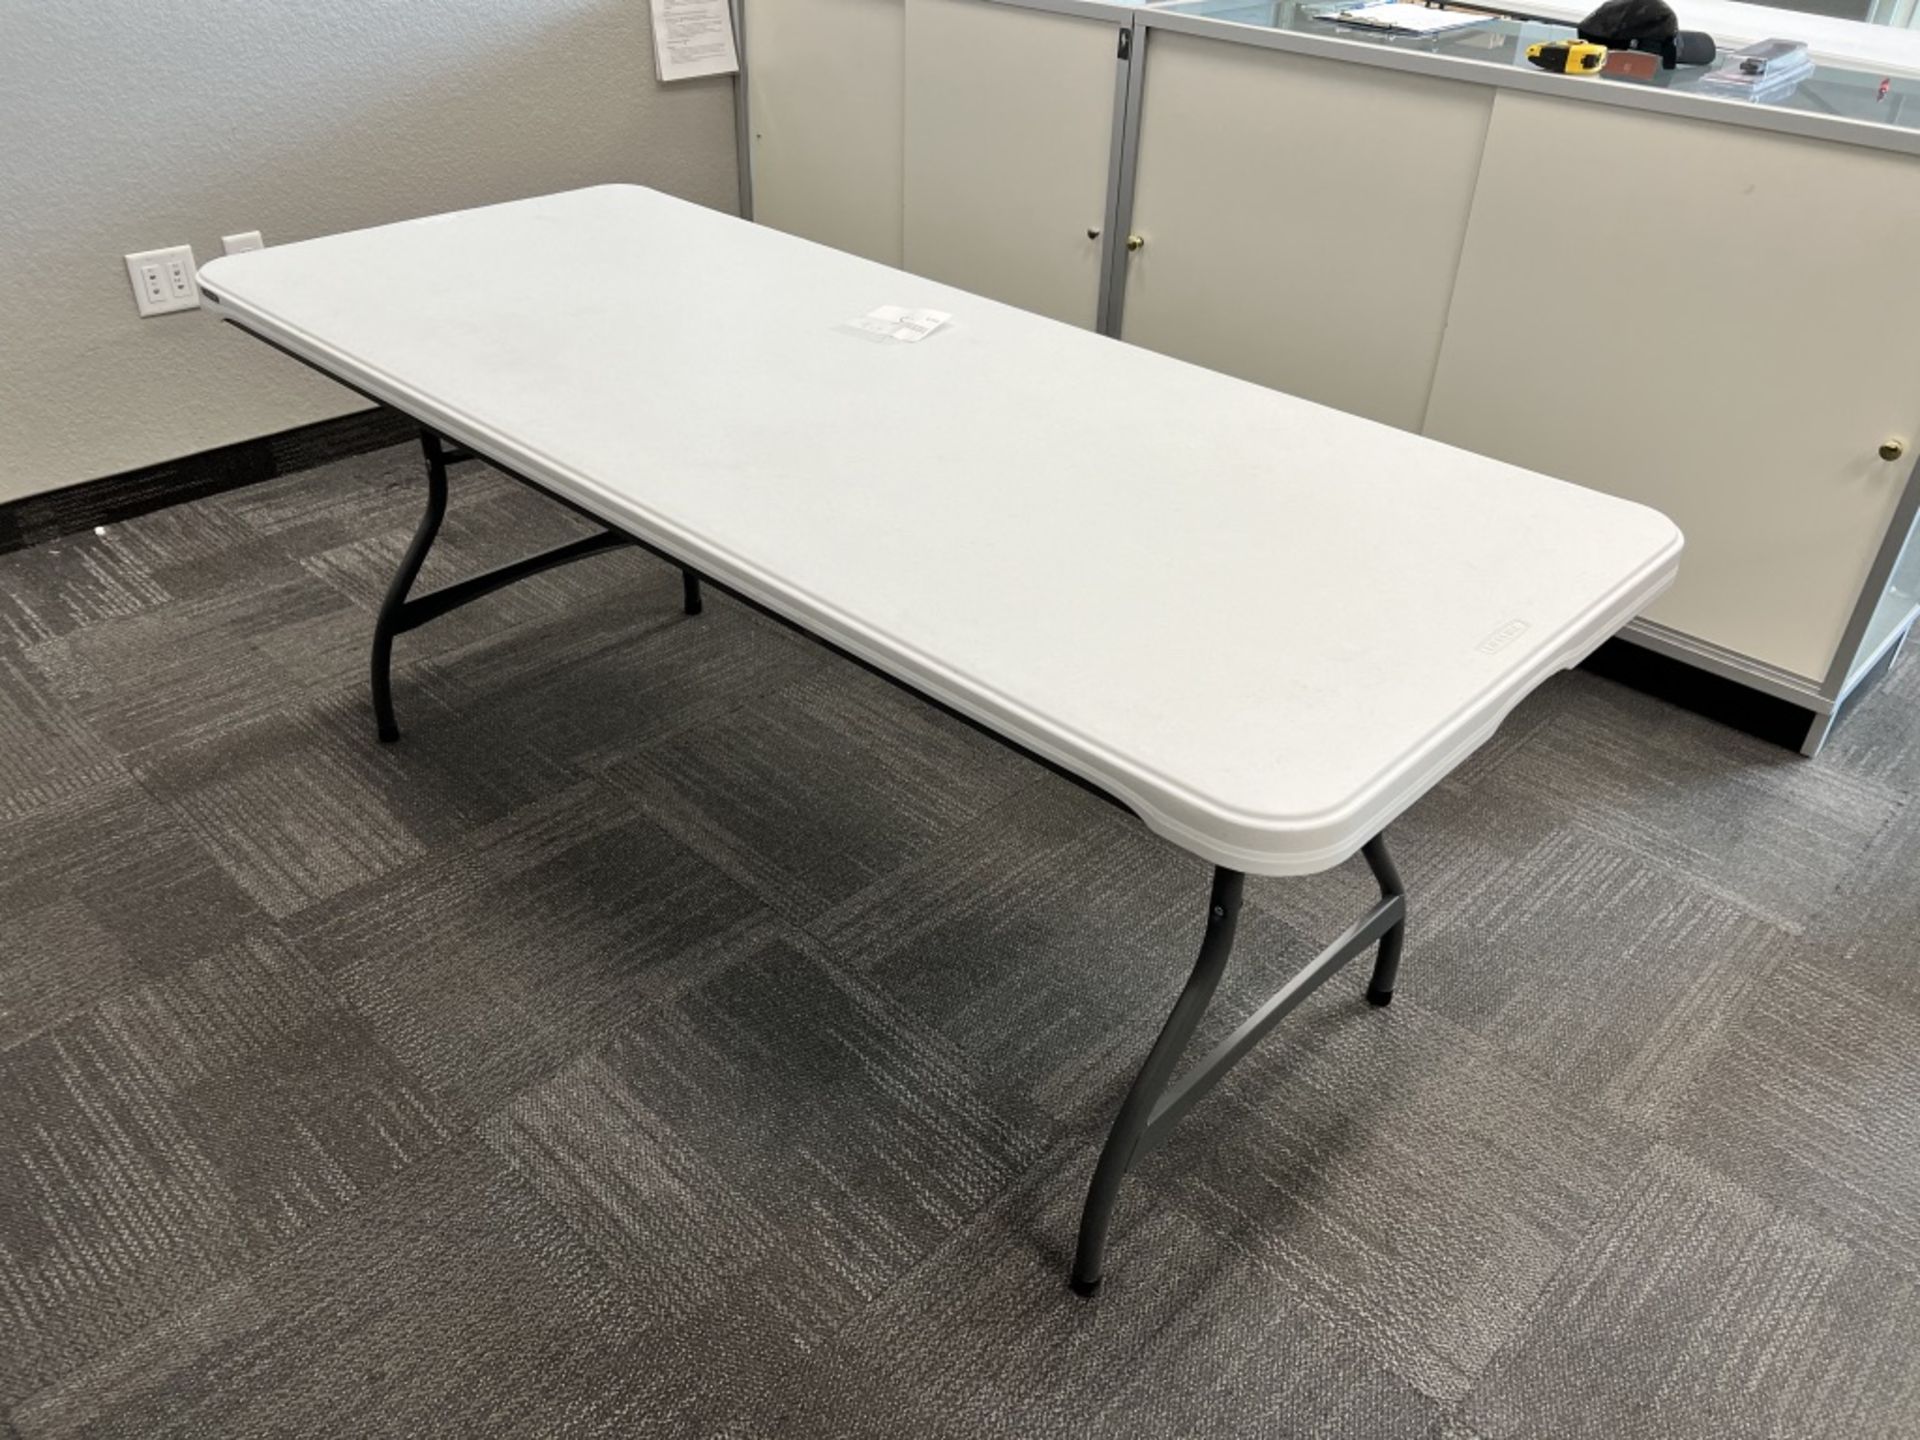 LIFETIME 6' X 30" W FOLDING TABLE (WHITE) - Image 2 of 3